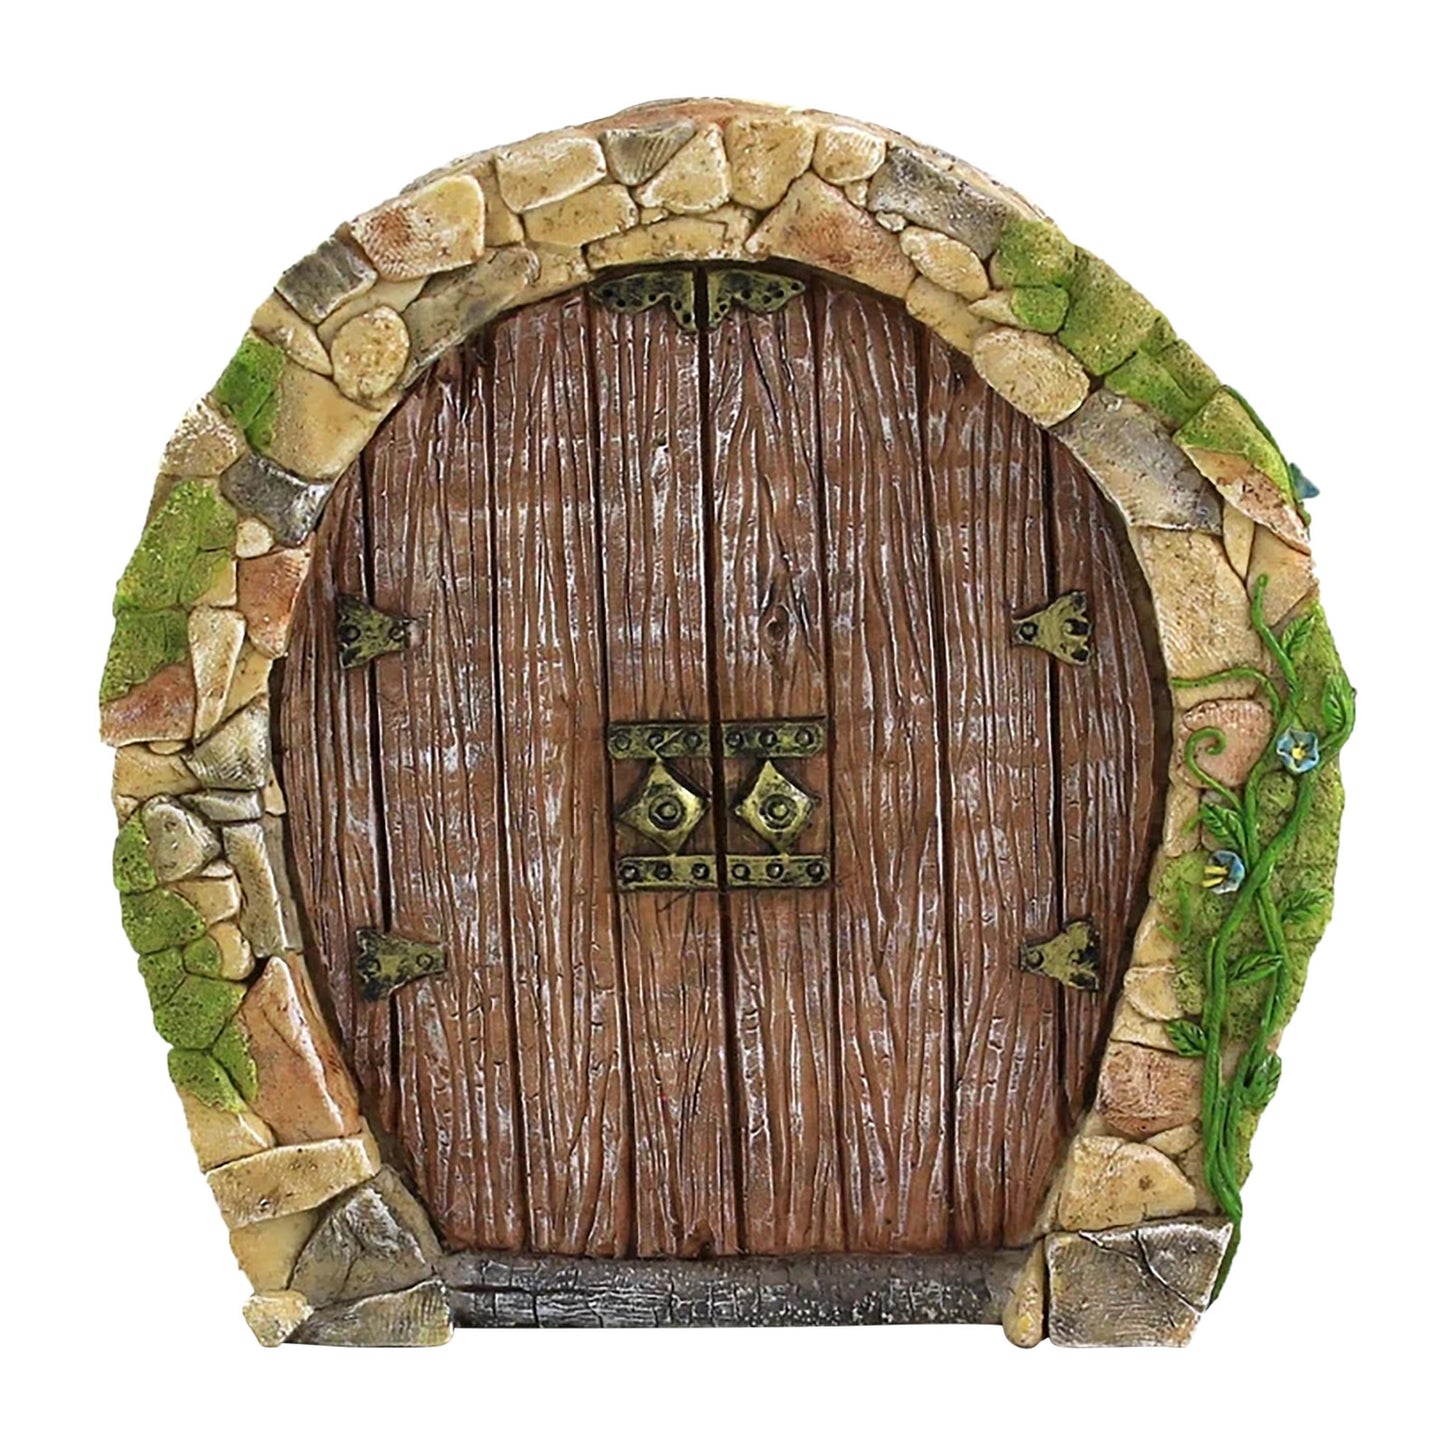 Elf Fairy Tale Door Wooden Three-dimensional Home Decor Ornaments